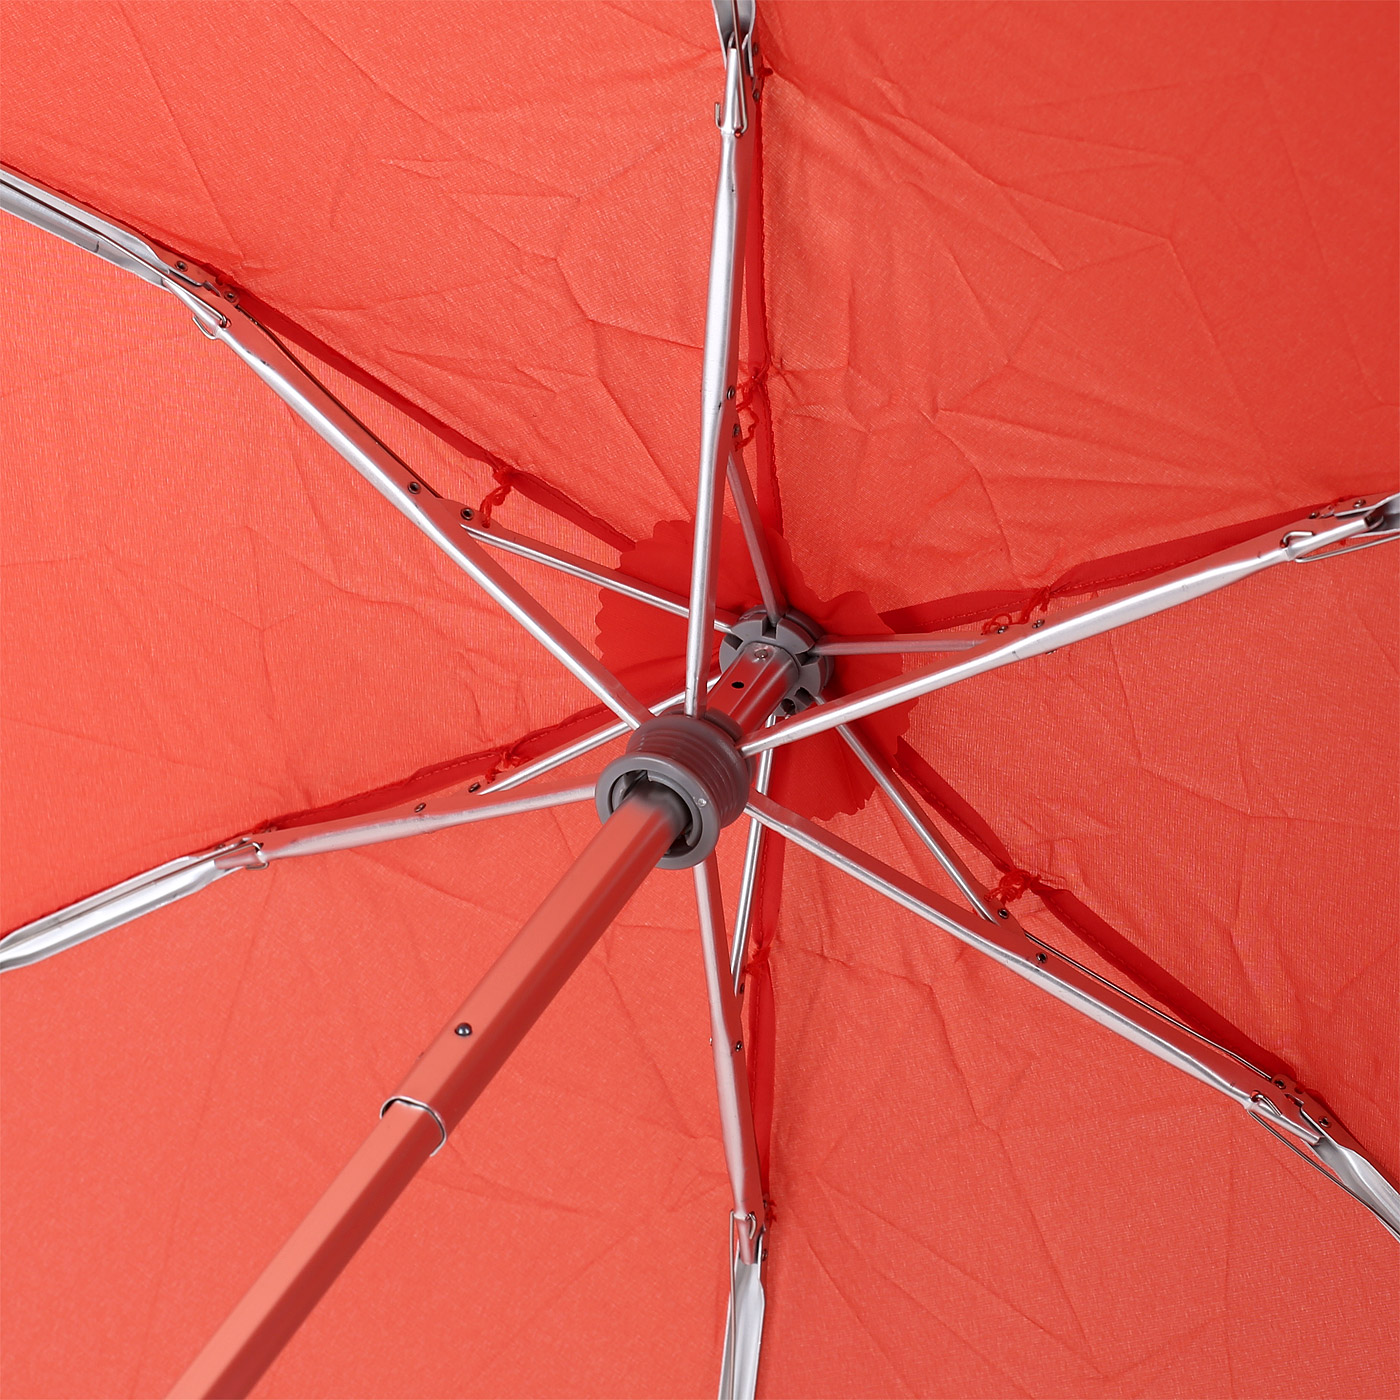 Зонт с чехлом на молнии Samsonite Minipli colori